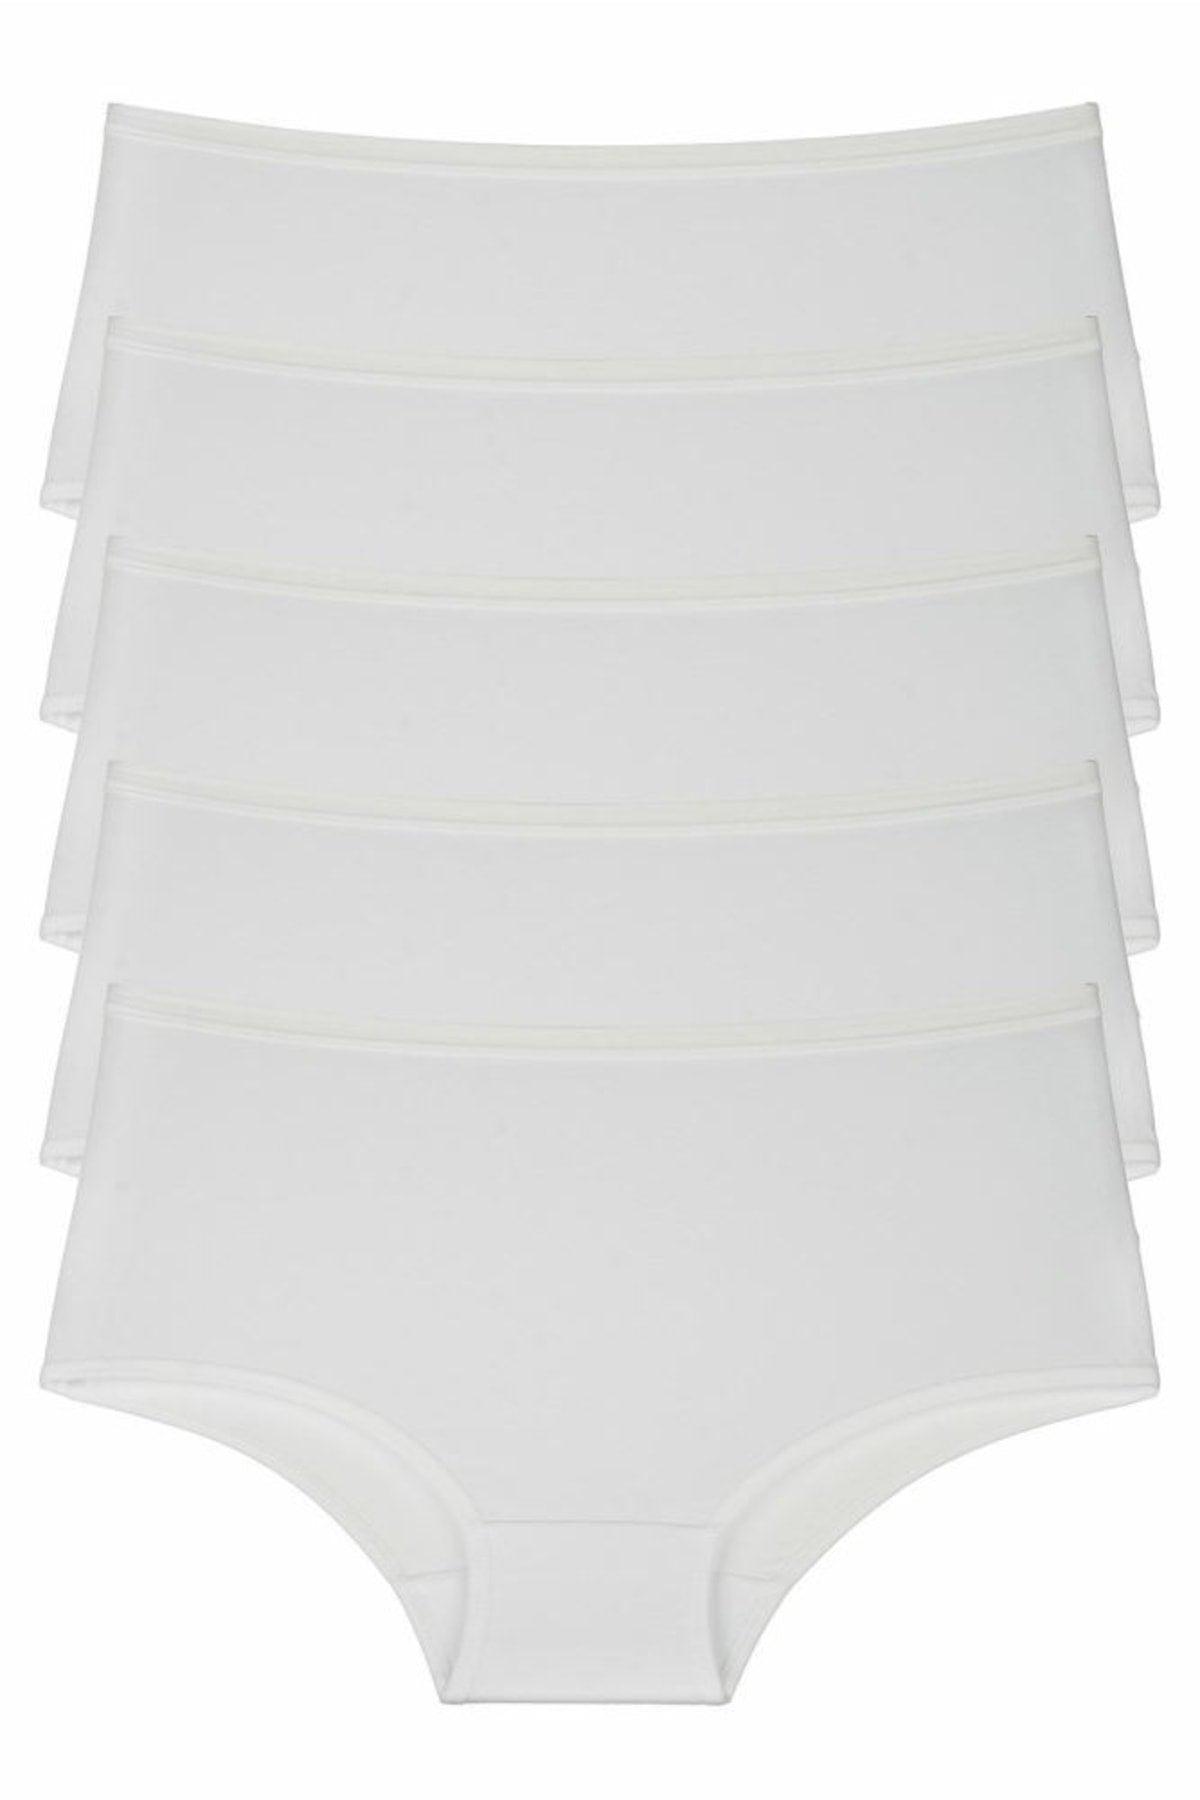 White Women's Panties 5 Pcs Pack High Waist - Swordslife